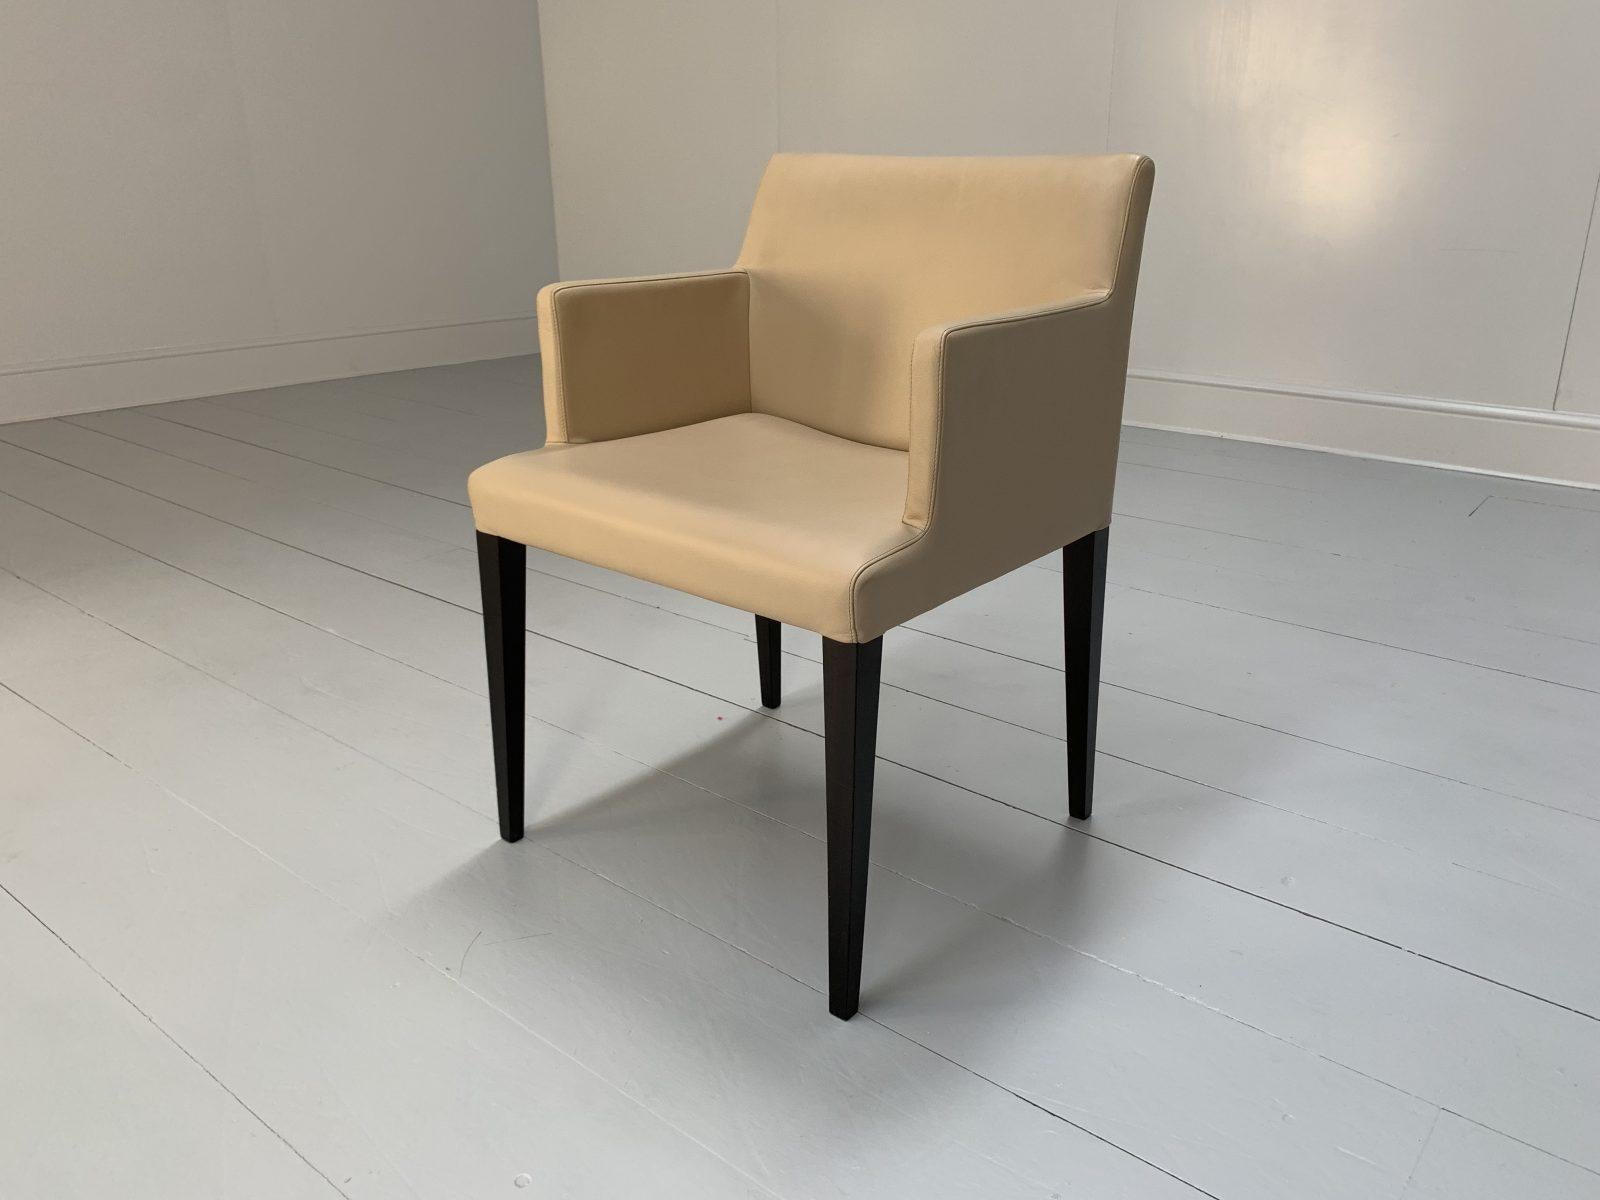 Suite of 6 Poltrona Frau “Liz B” Dining Chairs – In Brown “Pelle Frau” Leather 7